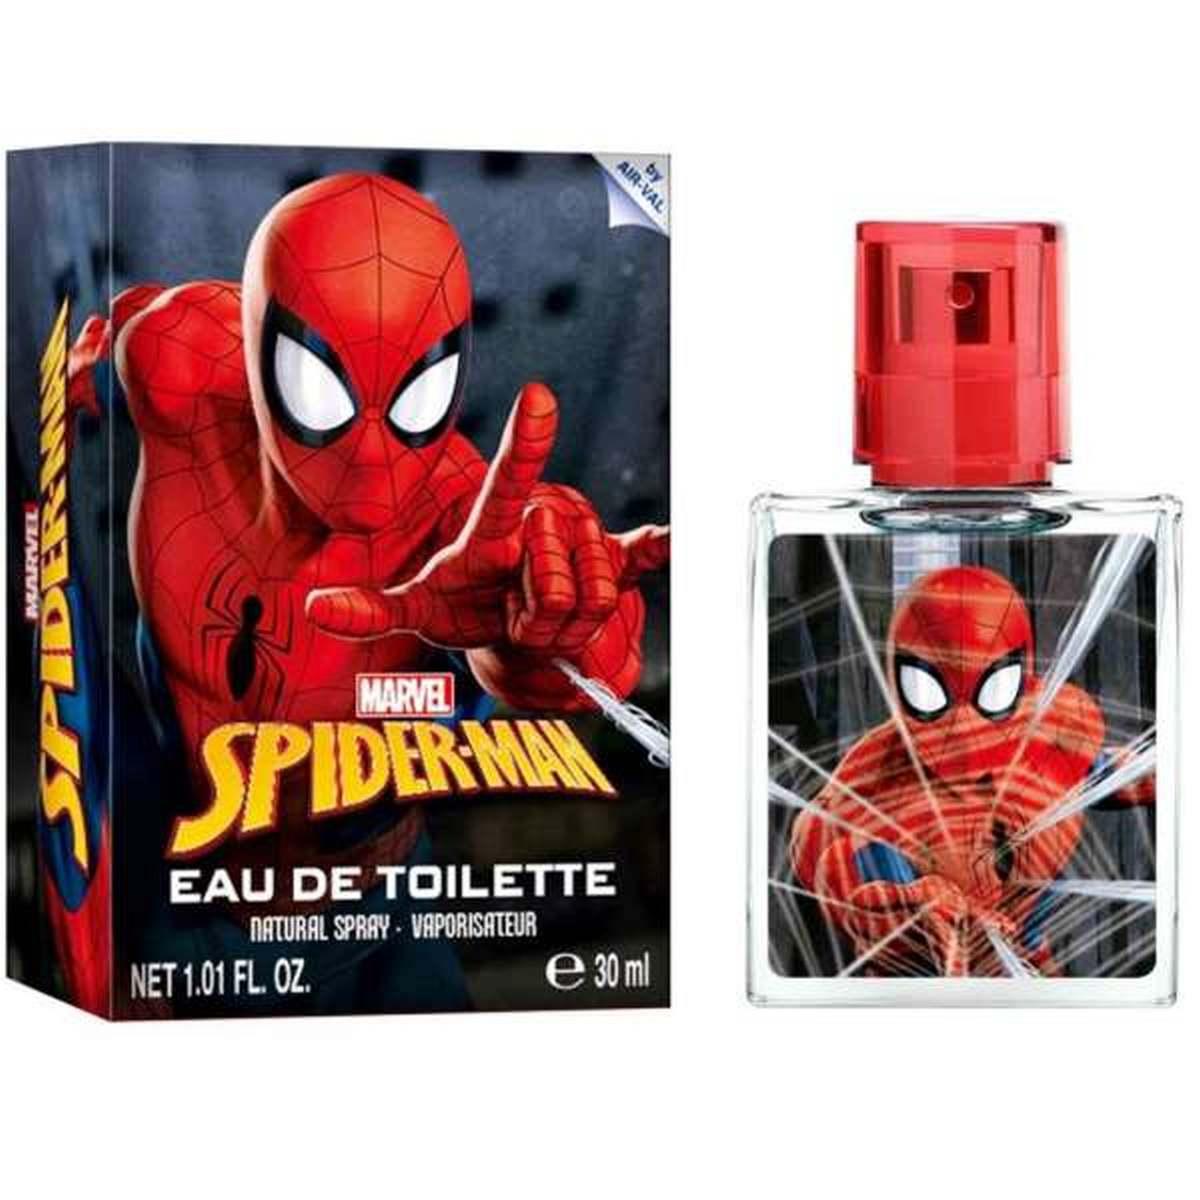 Spiderman 30 ml